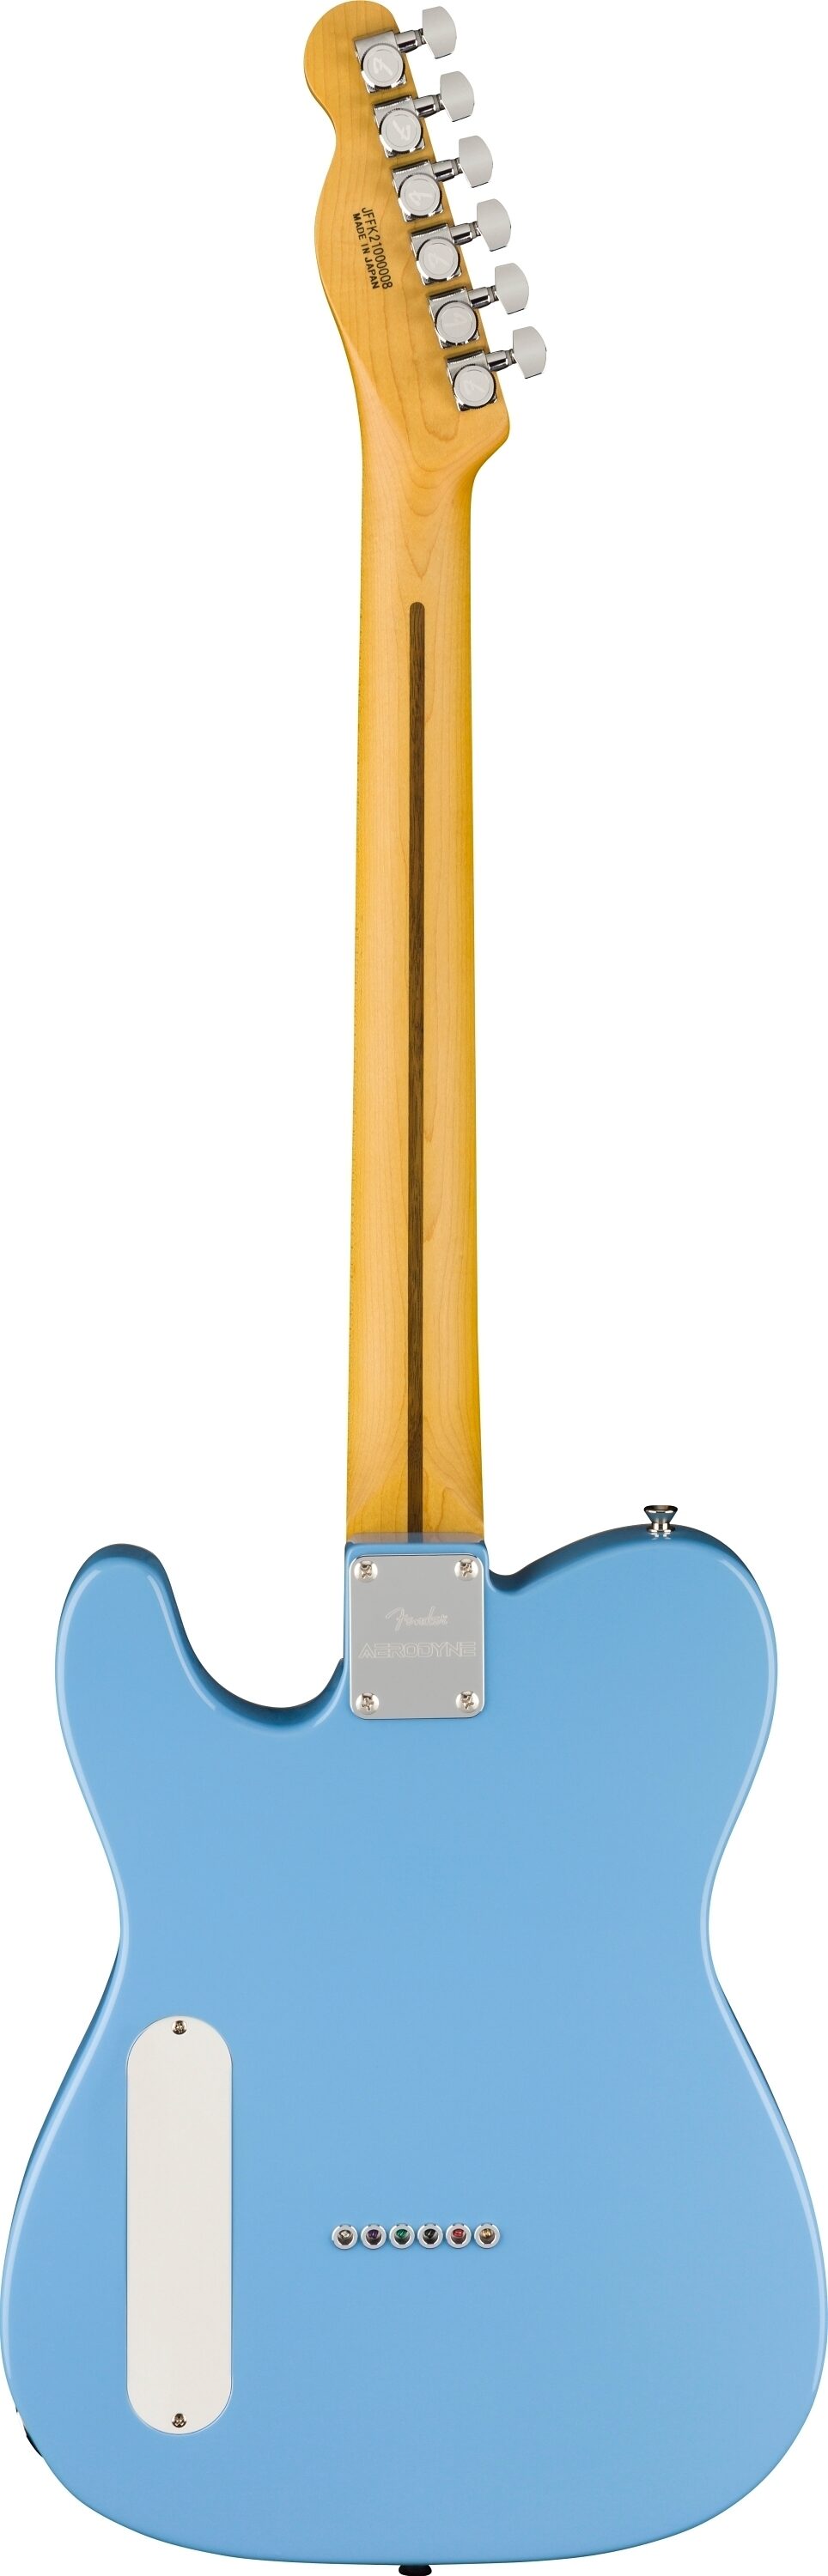 Fender Aerodyne Special Telecaster Electric Guitar | zZounds